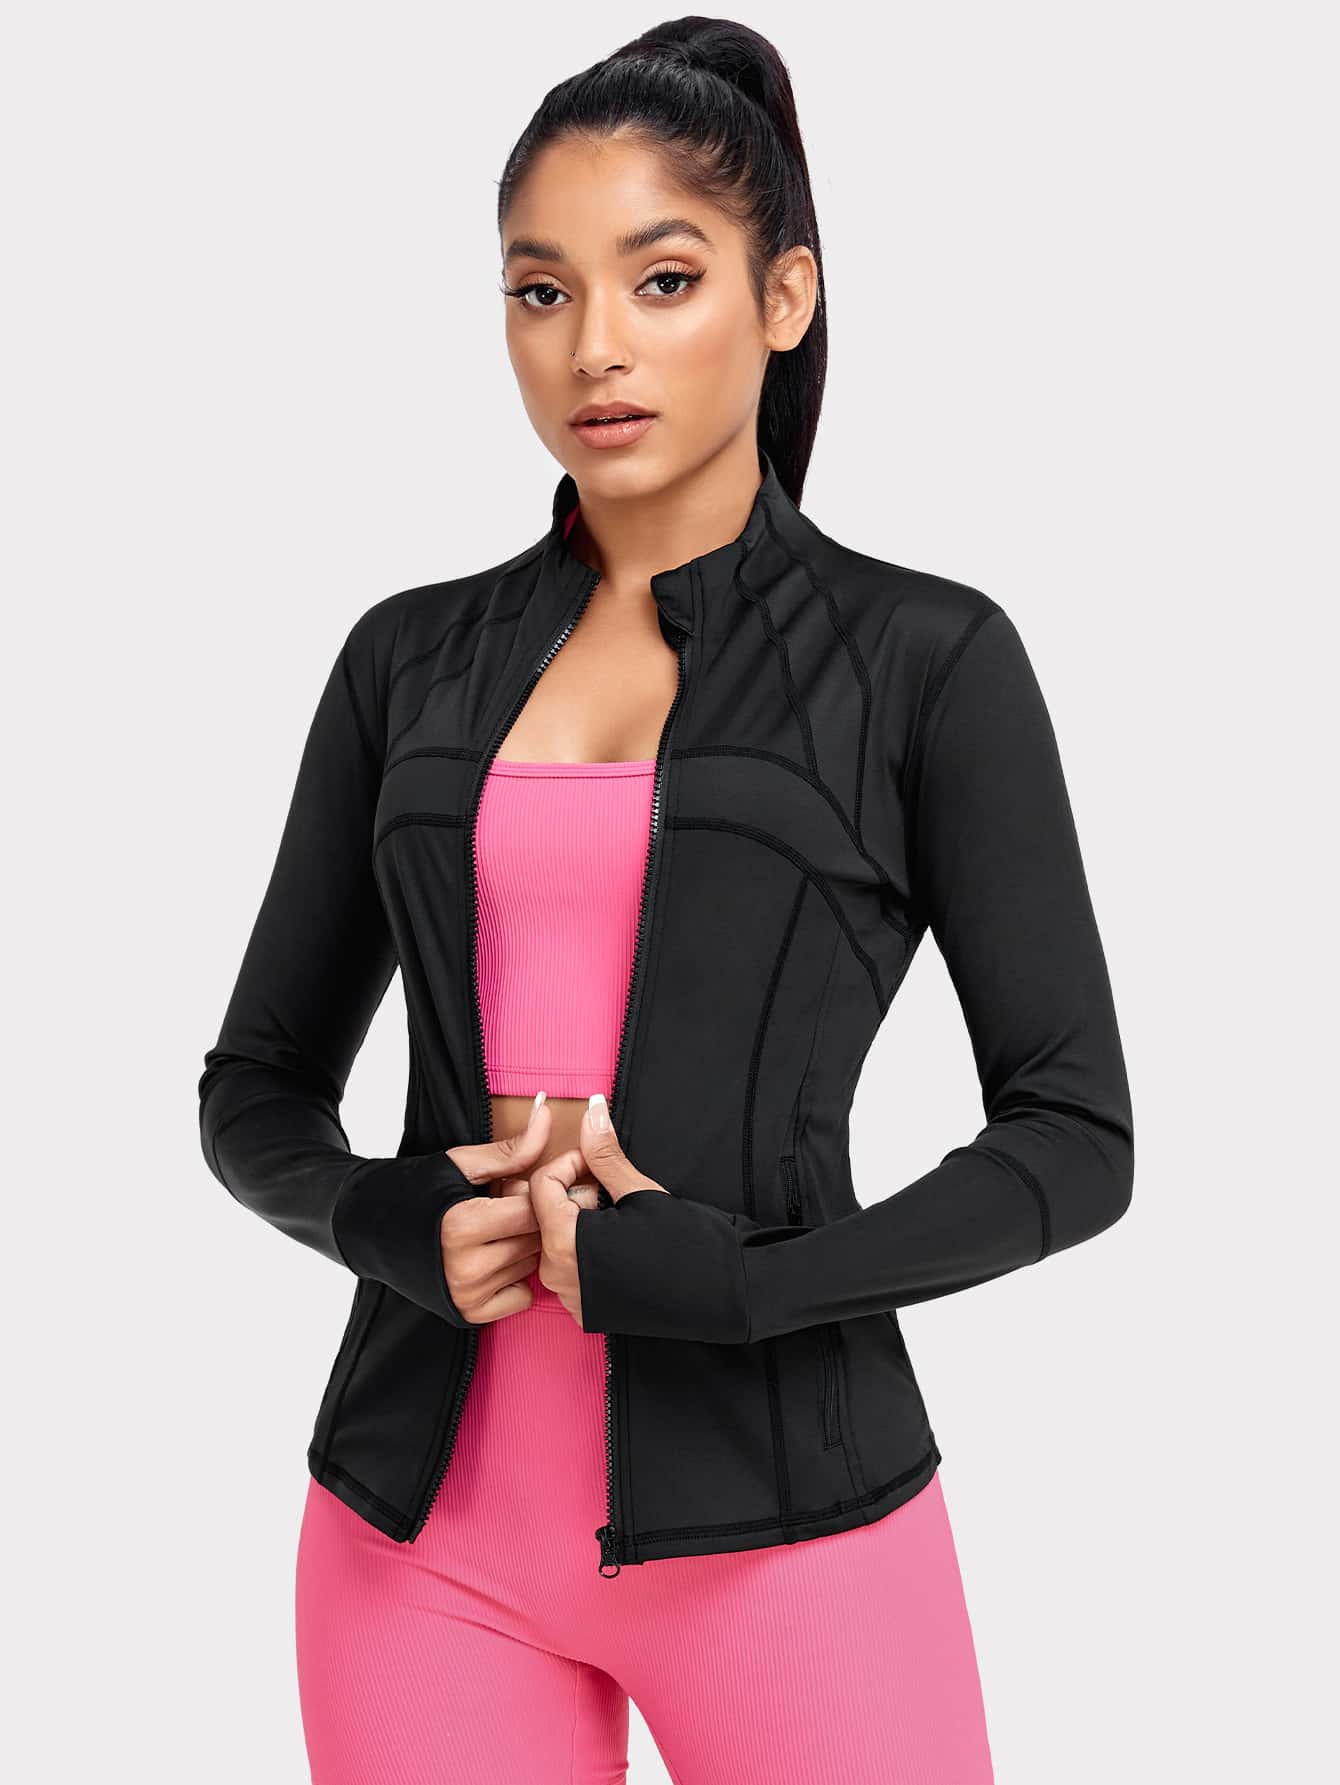 Women's Athletic Sports Jacket: Dual Zip Pockets & Thumb Hole Design